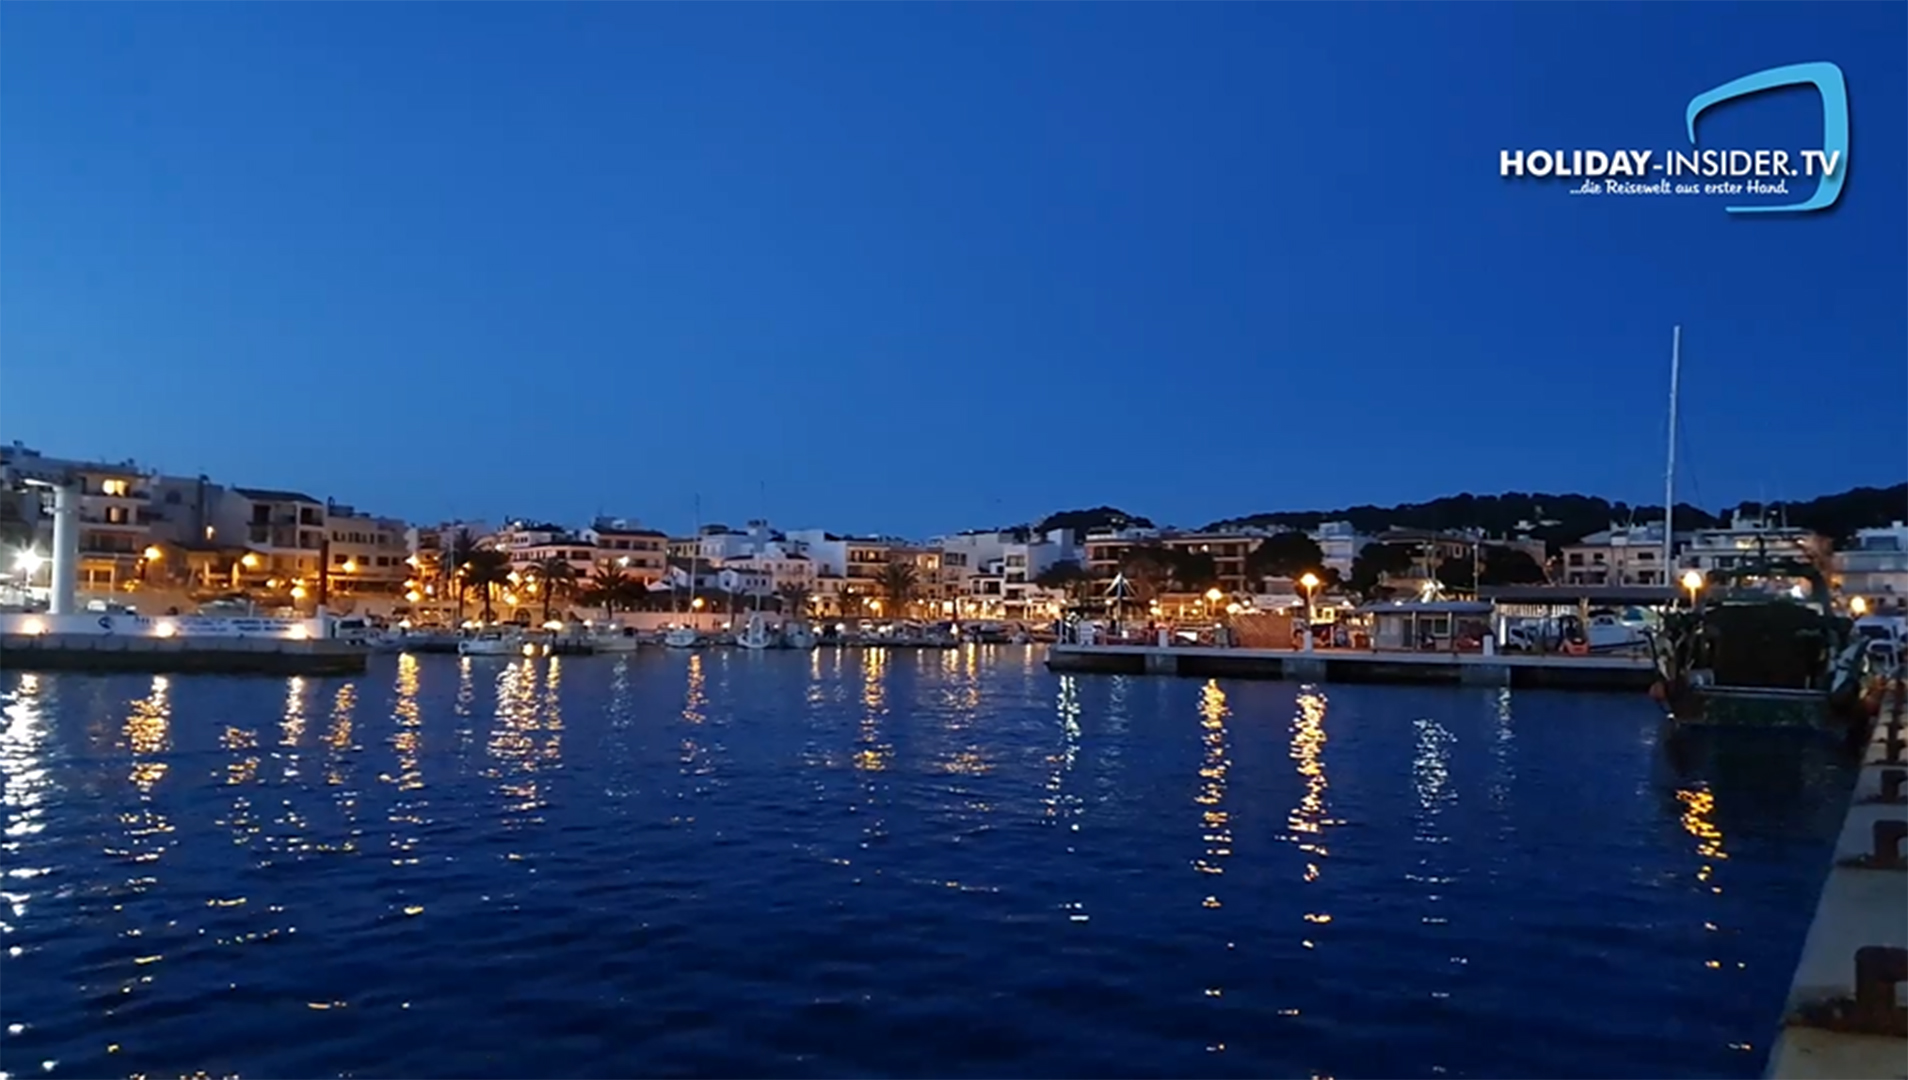 Winterabend auf Mallorca